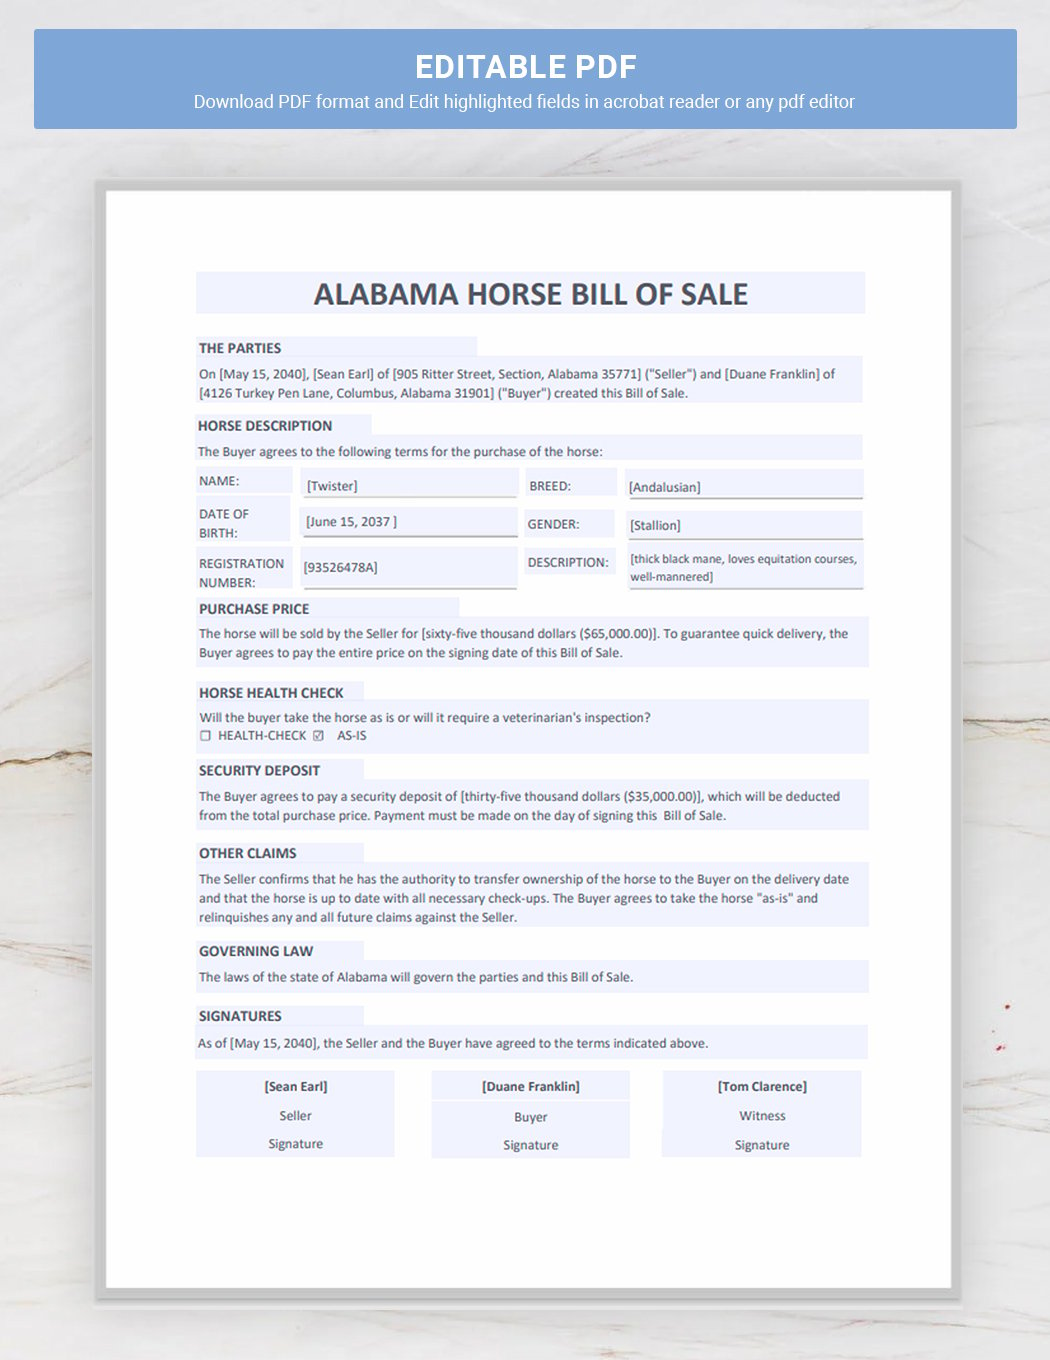 Alabama Horse Bill of Sale Template